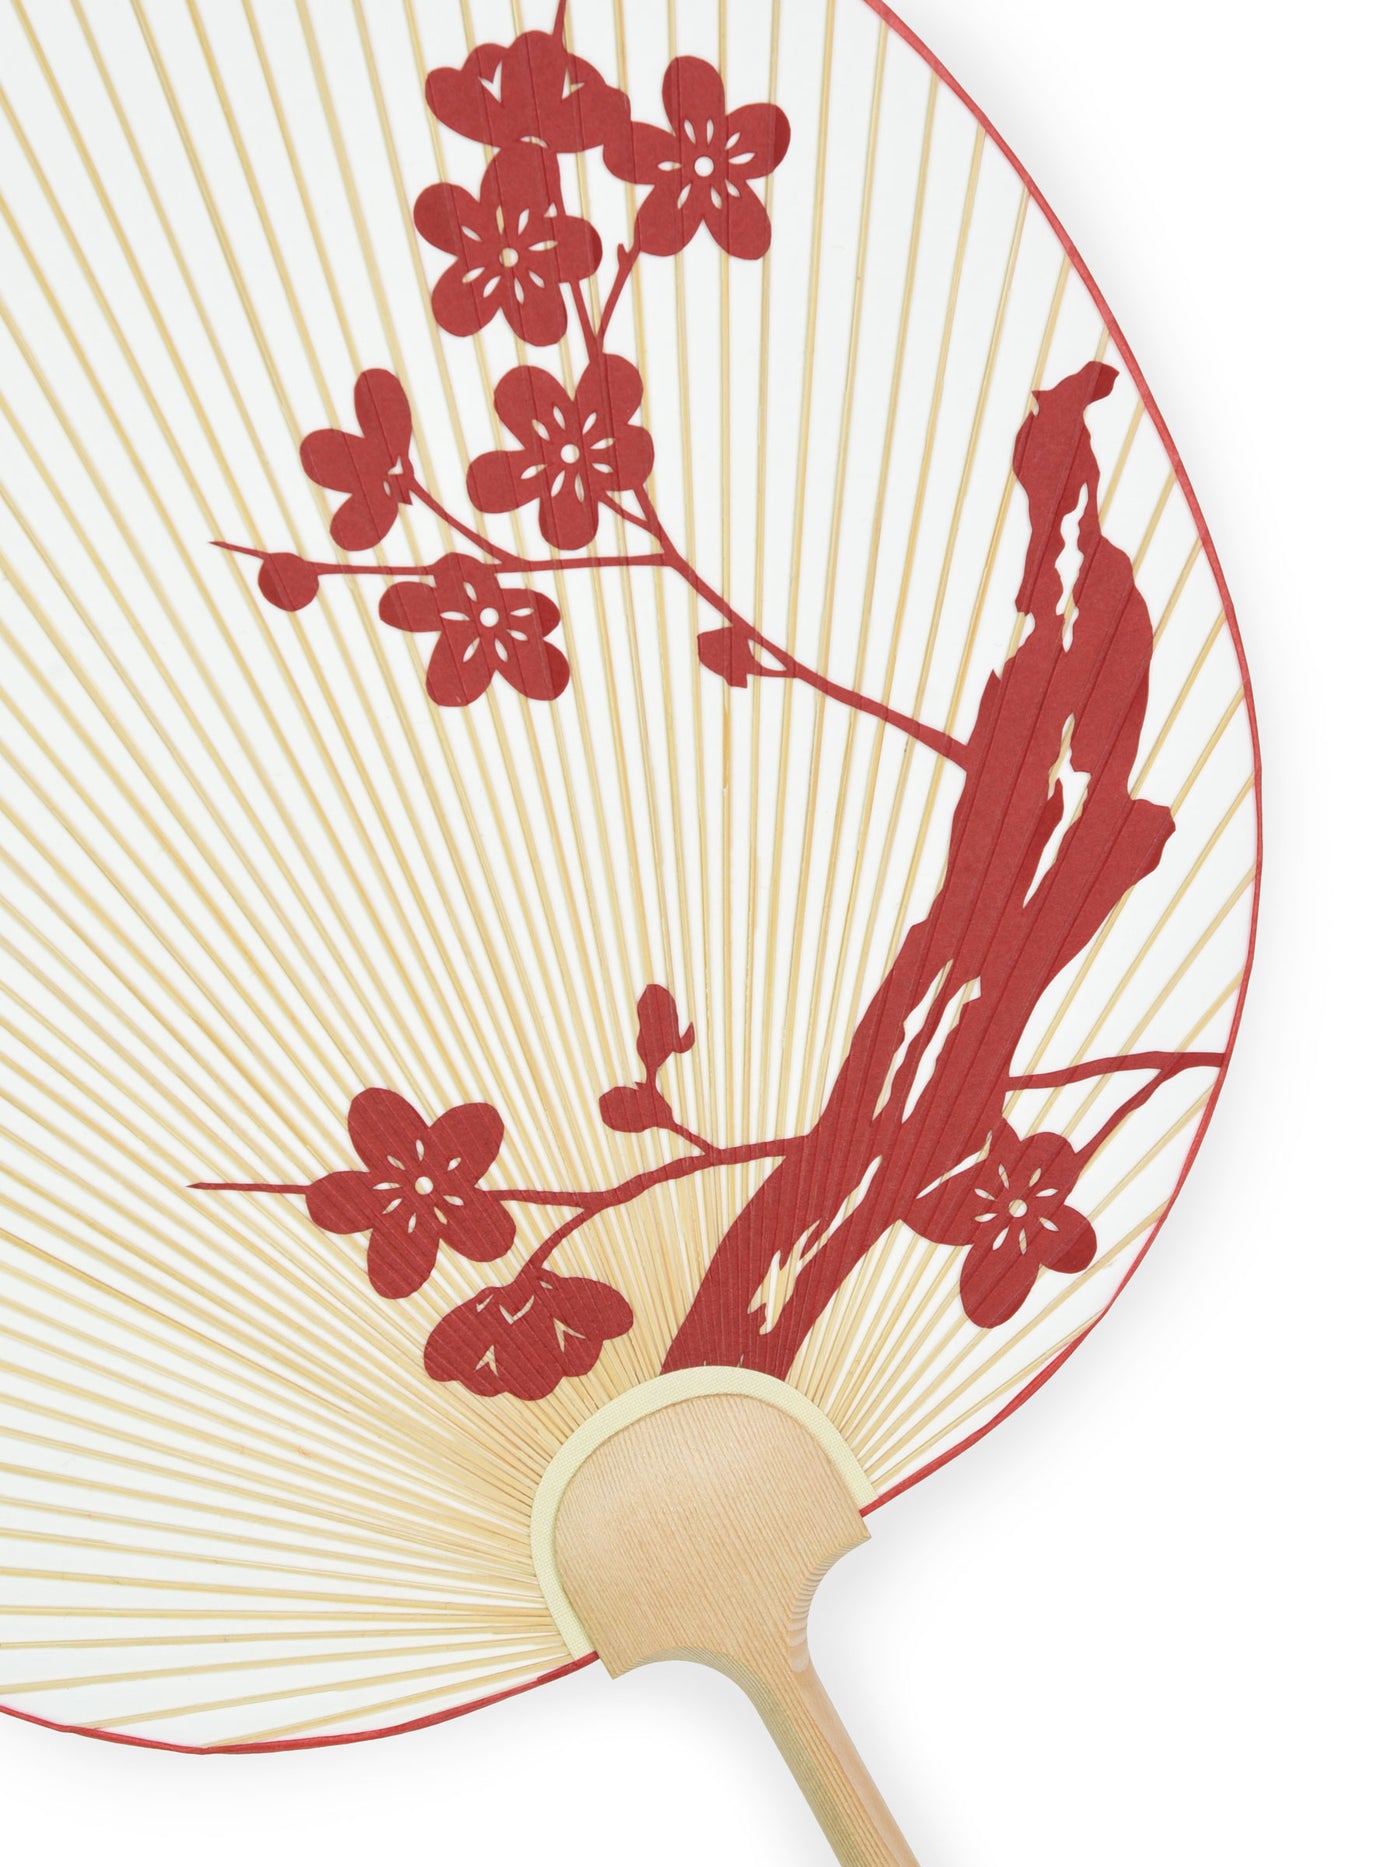 Ume Blossom Kyoto Uchiwa Fan